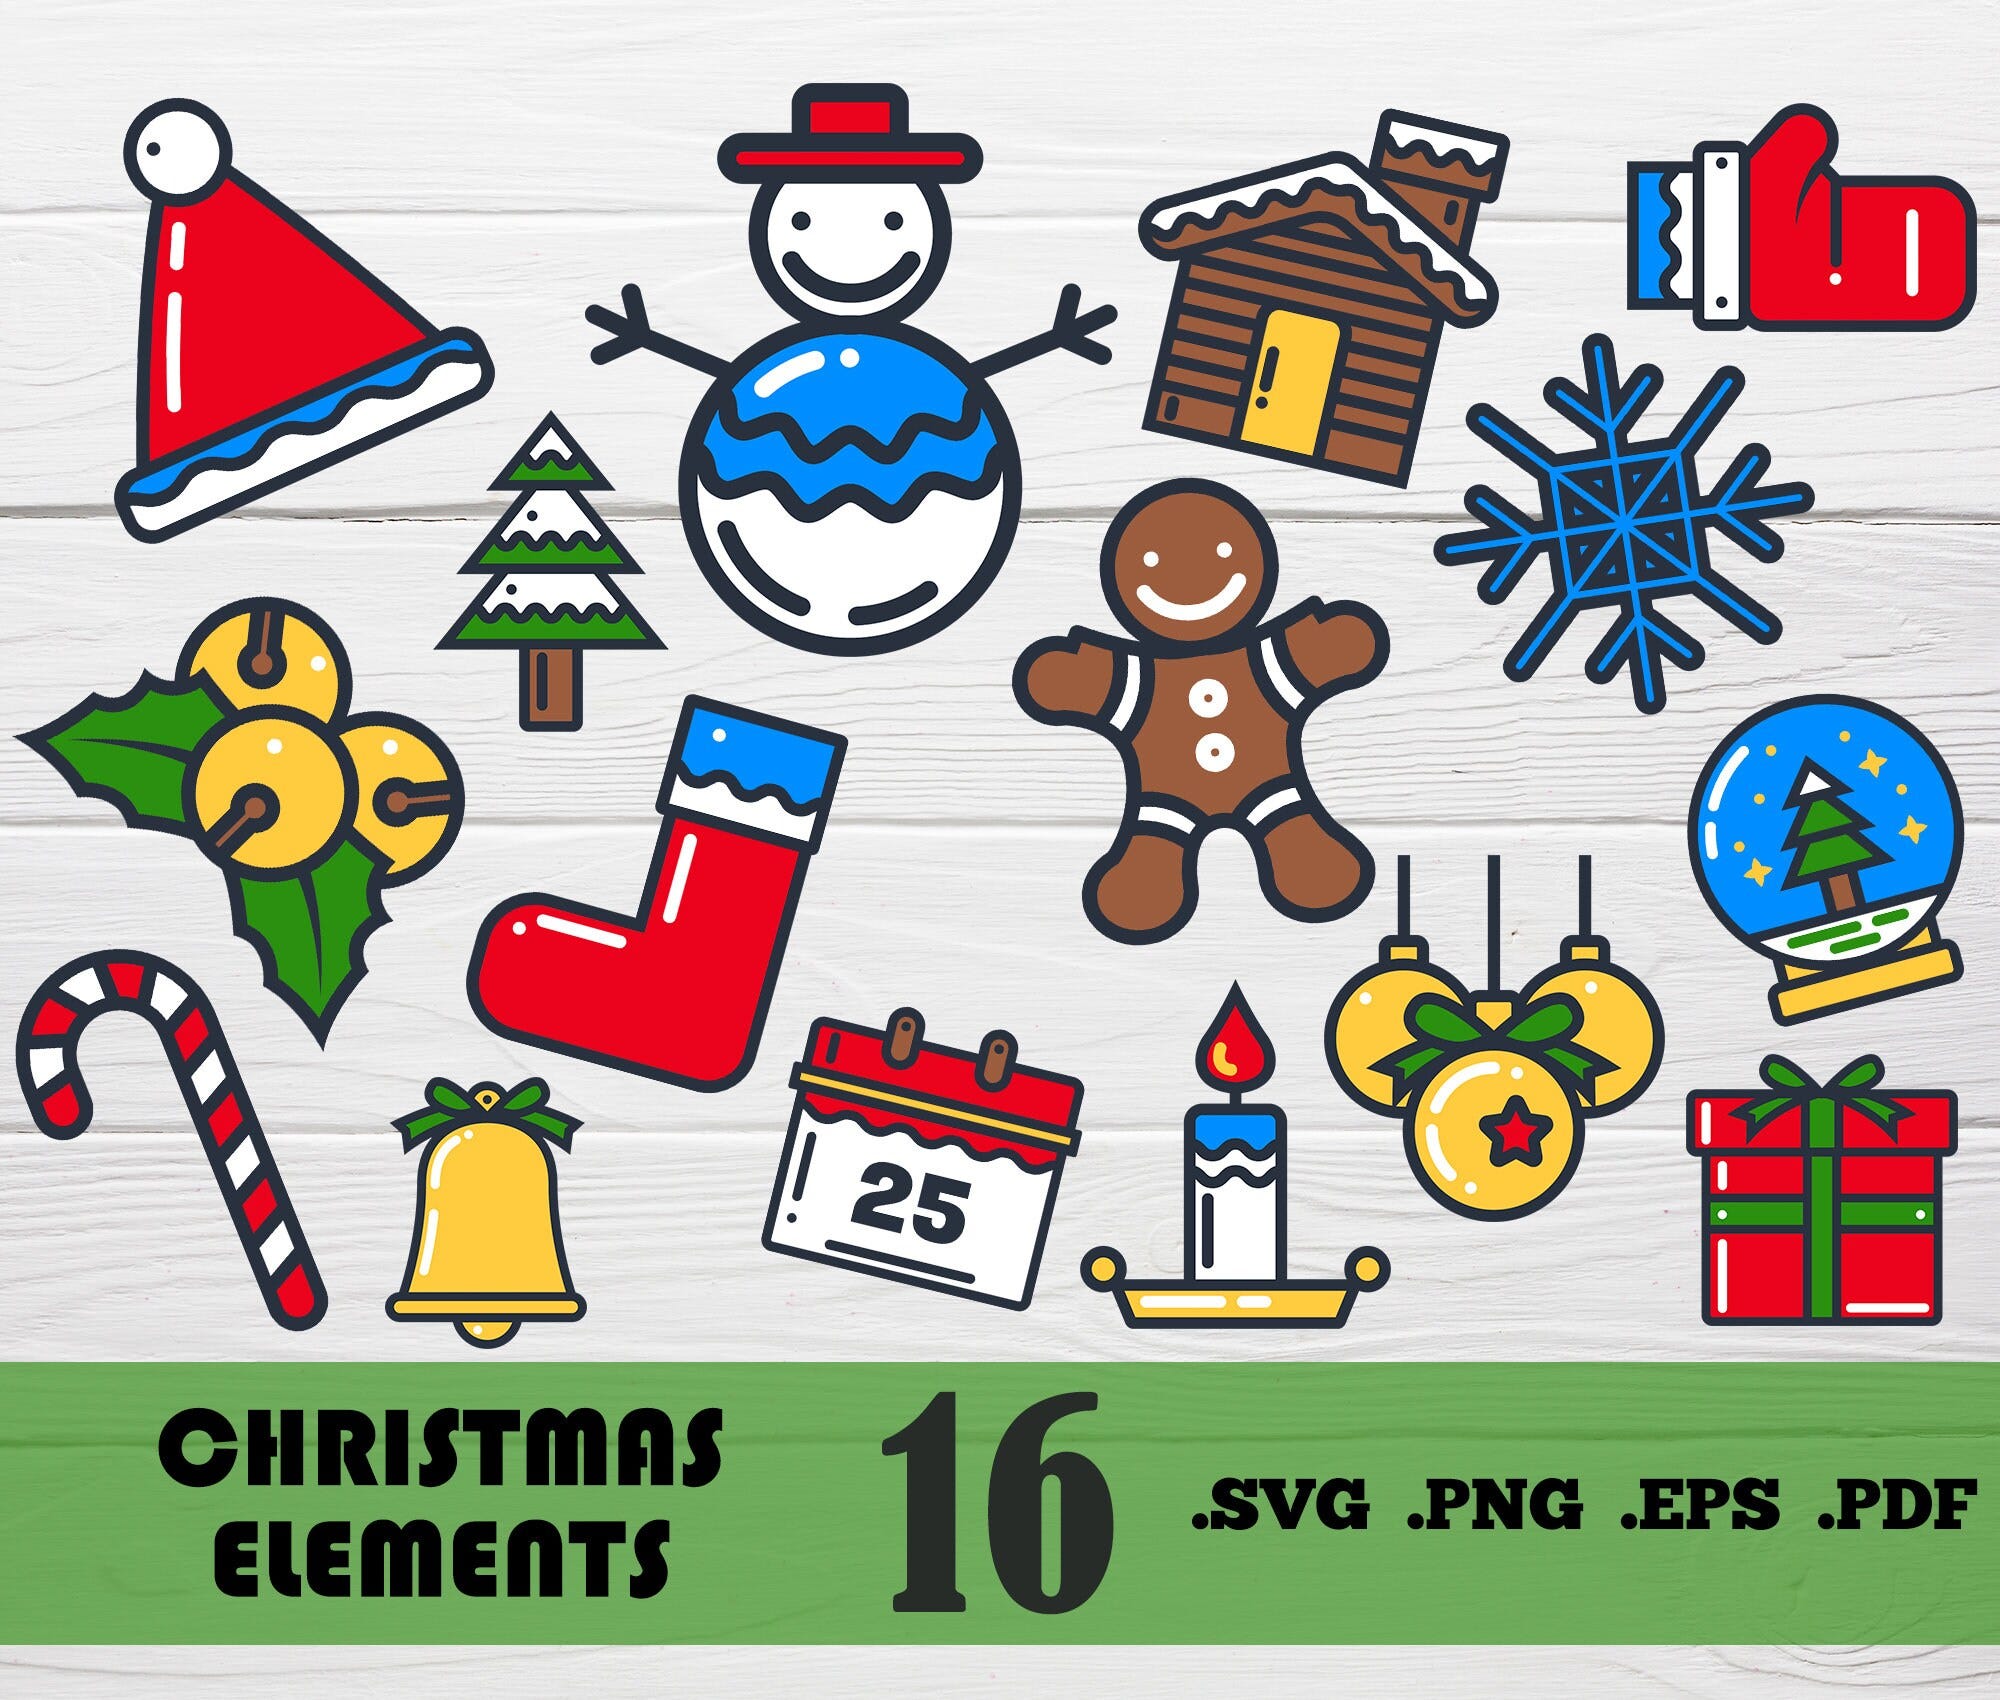 Christmas elements svg,Christmas Decor,Christmas Silhouette,Christmas SVG,Snowman Svg,Santa Claus Svg,Snowman Svg,Holiday Svg,print file,svg